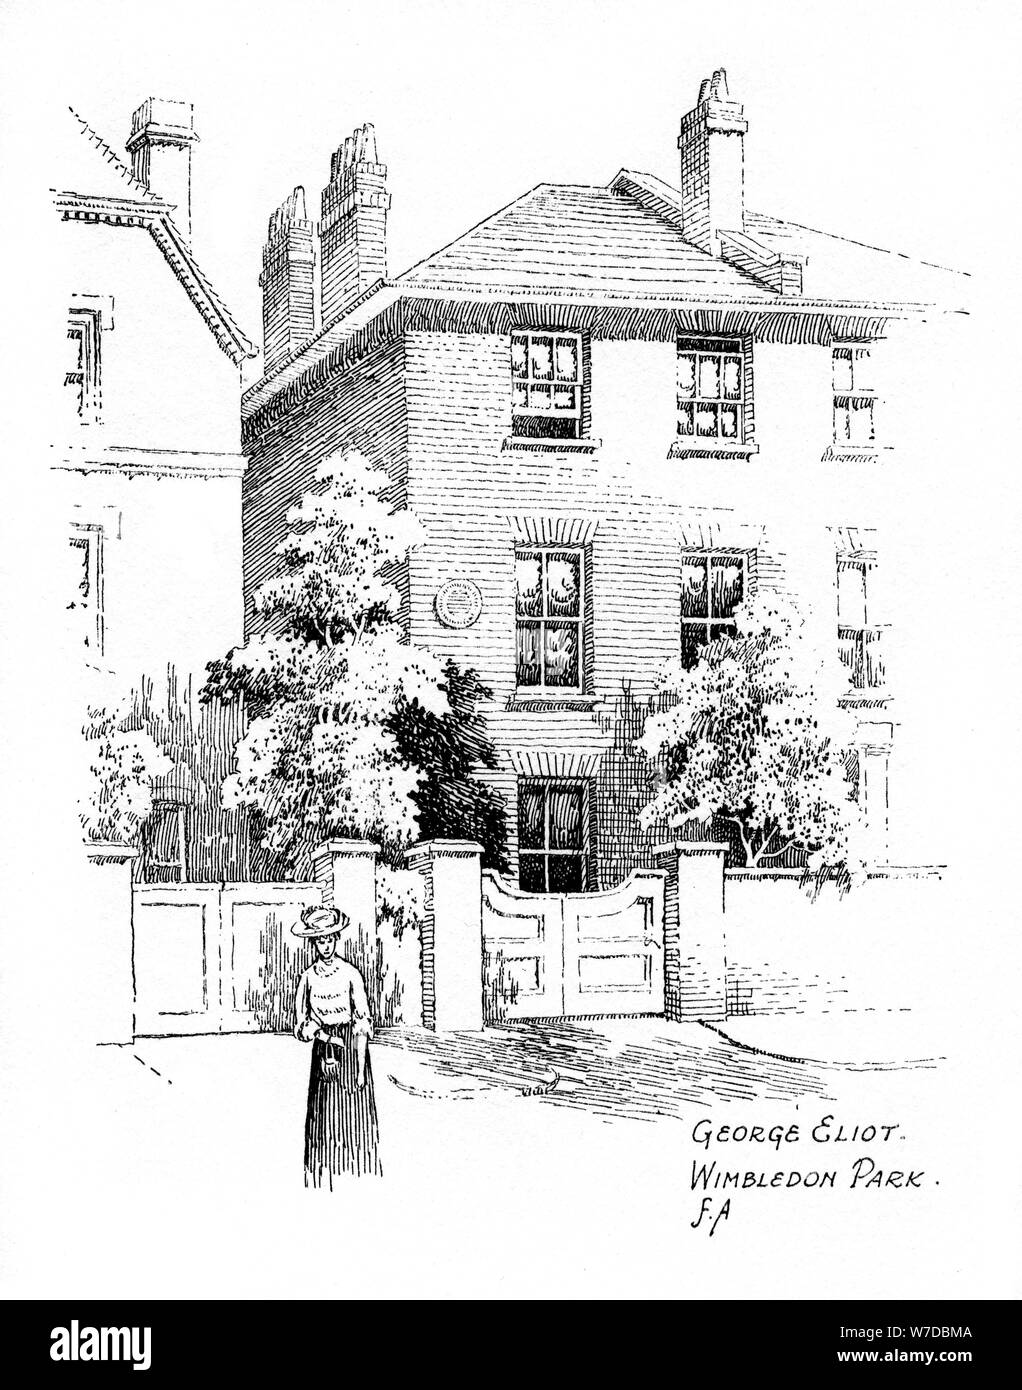 George Eliot's house, Wimbledon Park, Londra, 1912. Artista: Federico Adcock Foto Stock